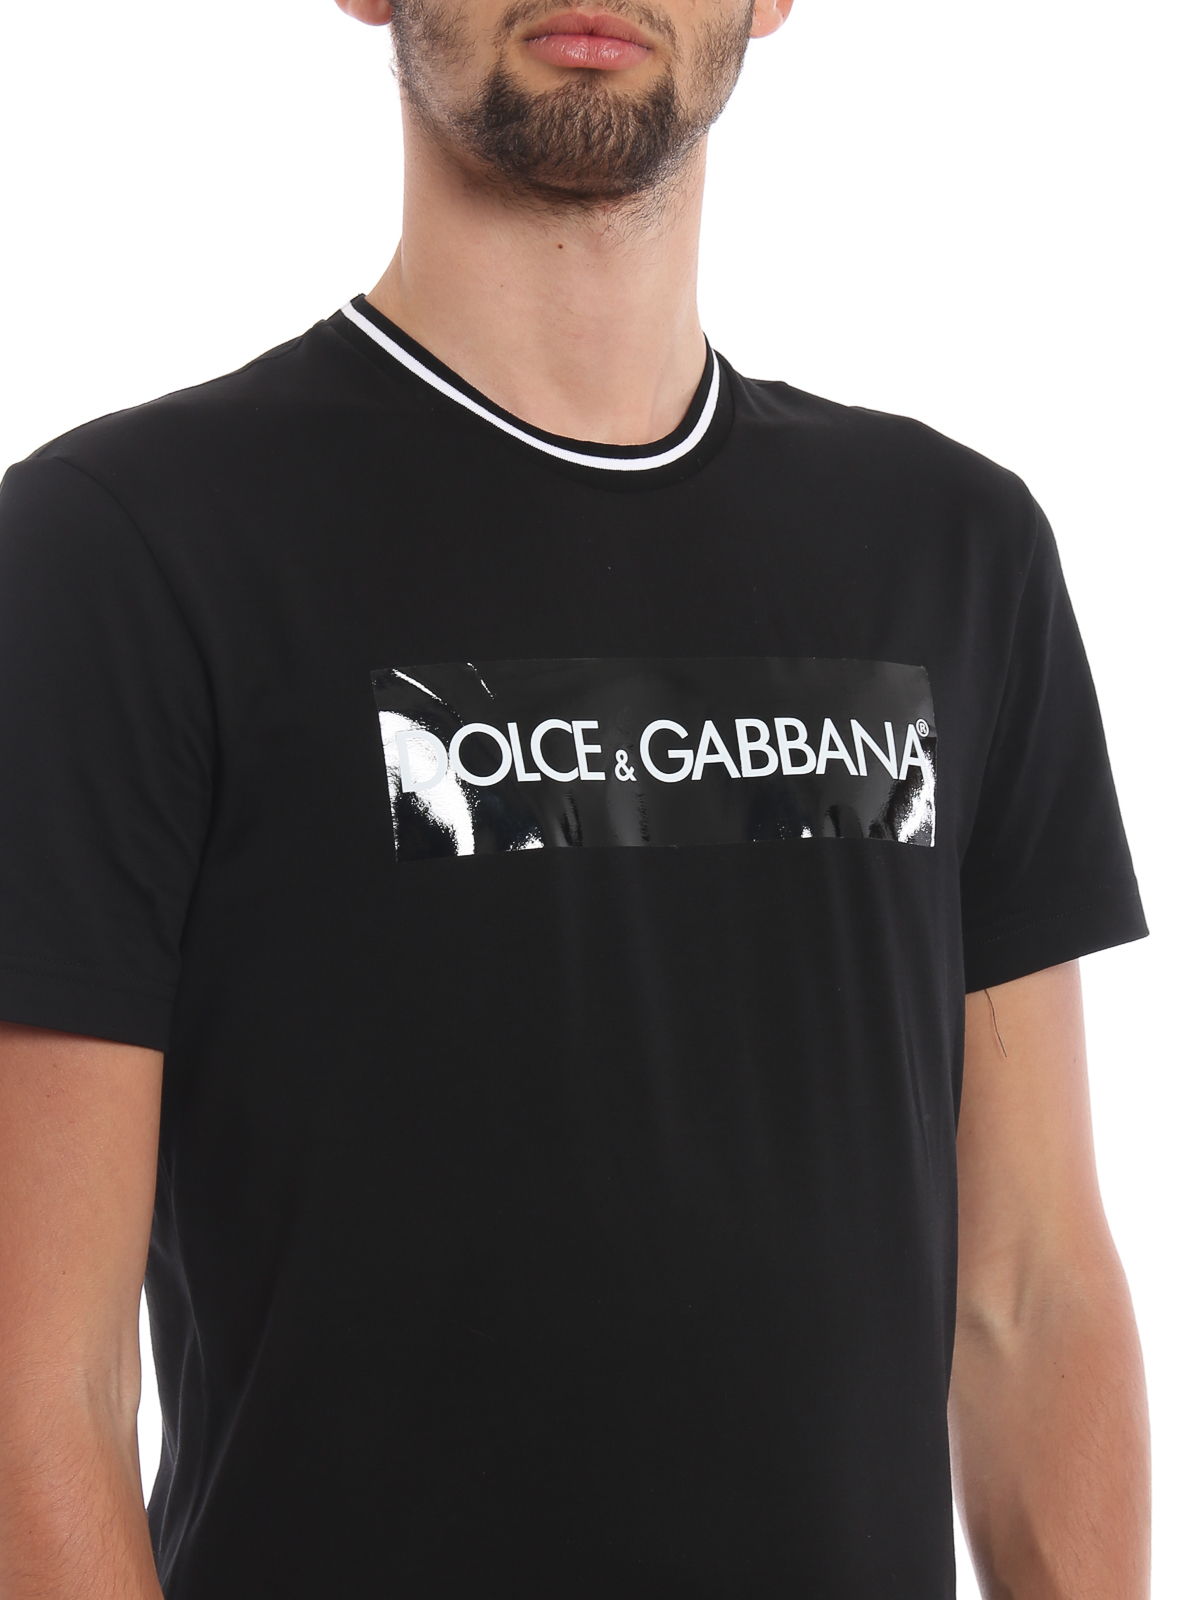 dolce and gabbana black t shirt